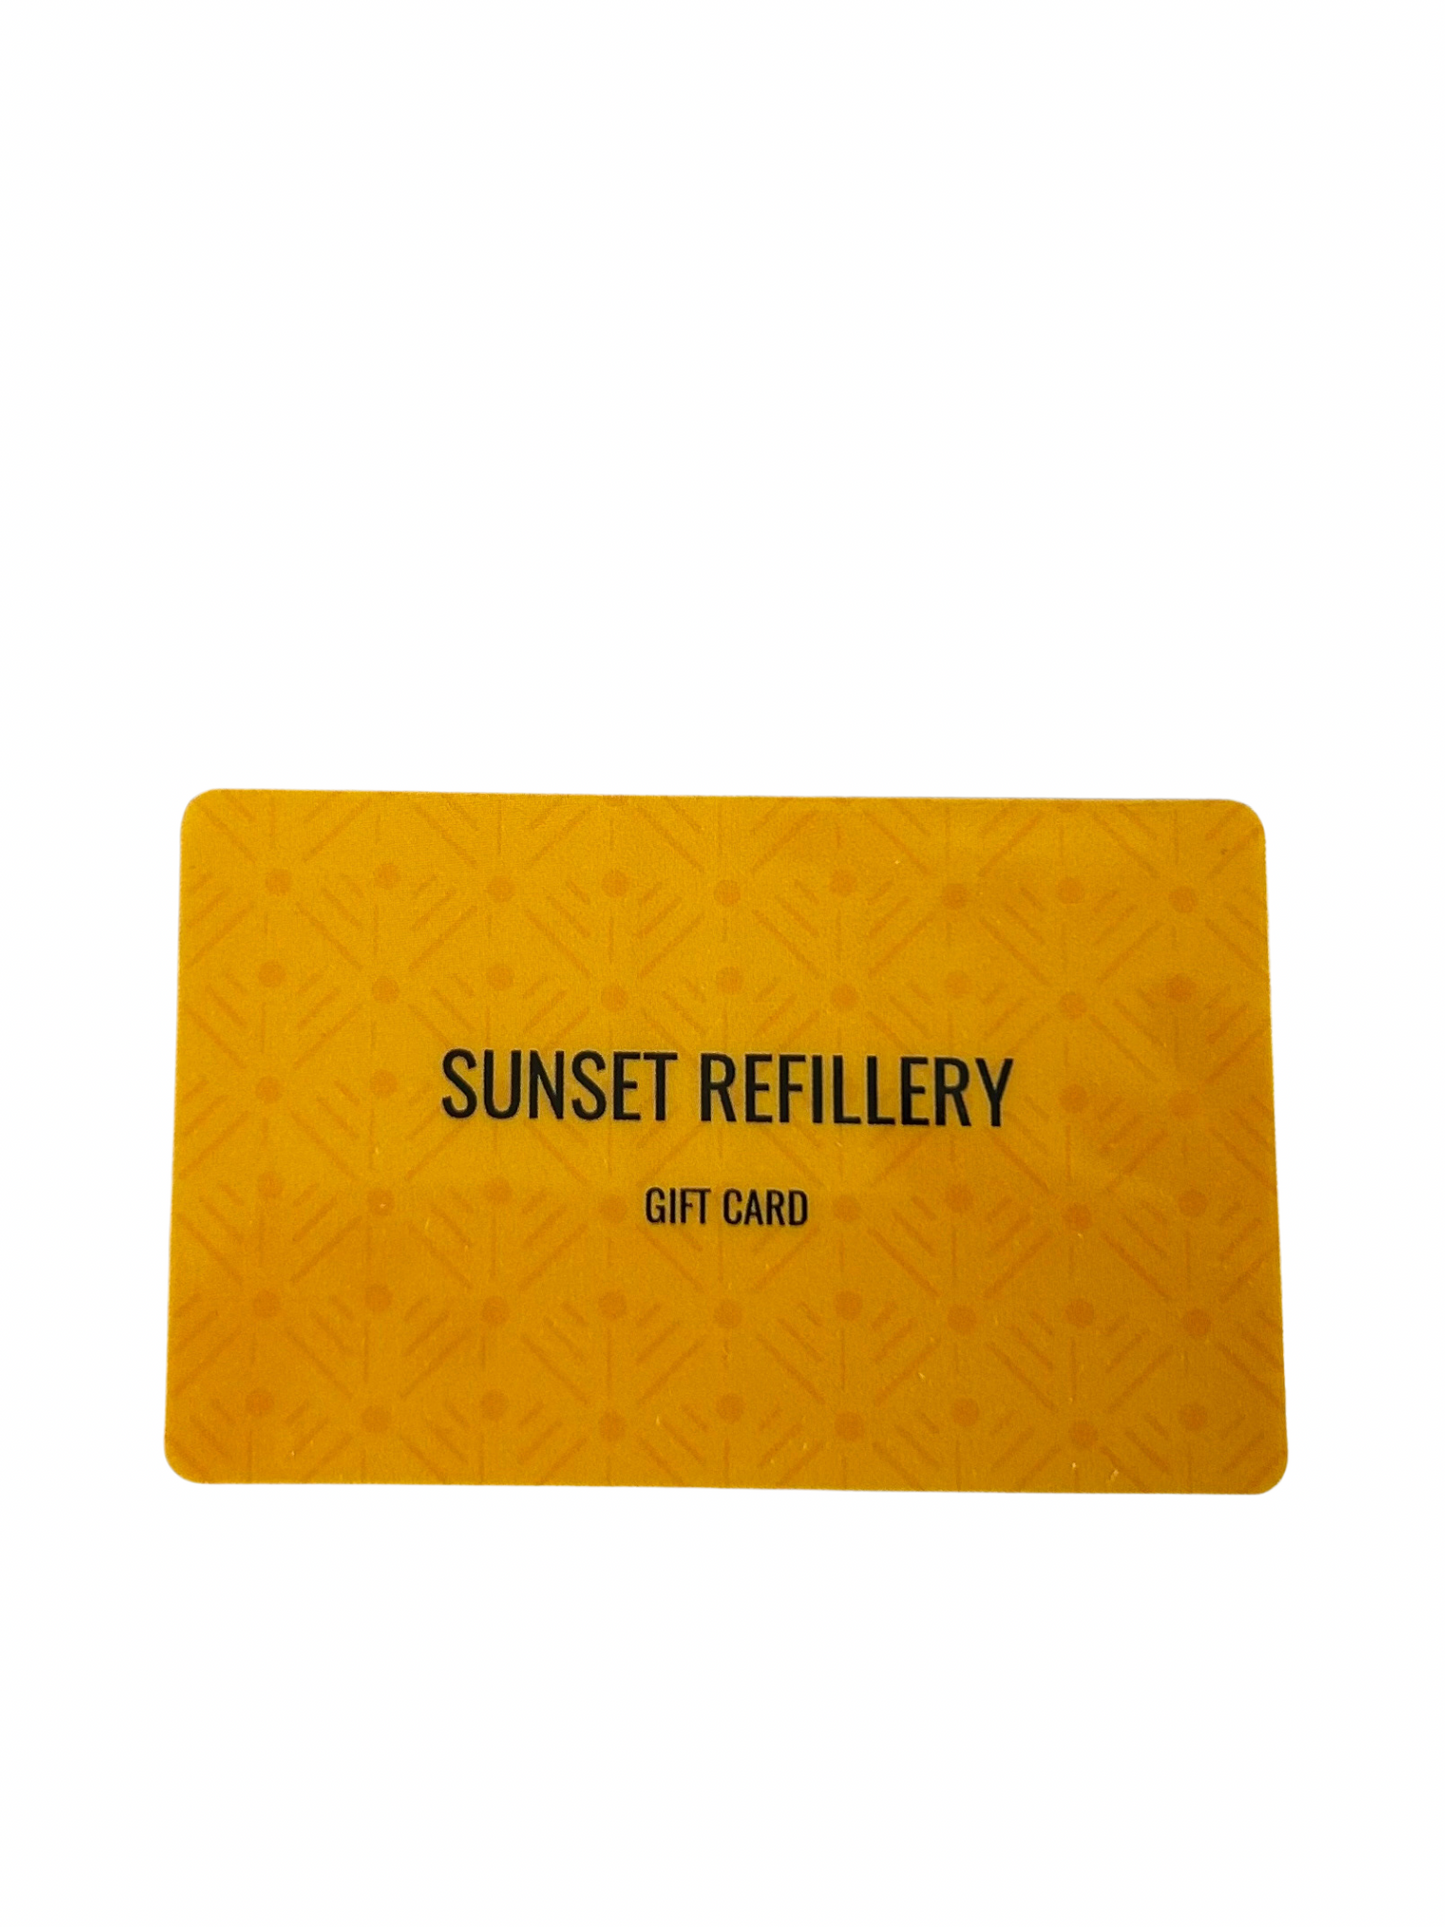 Sunset Refillery Gift Card